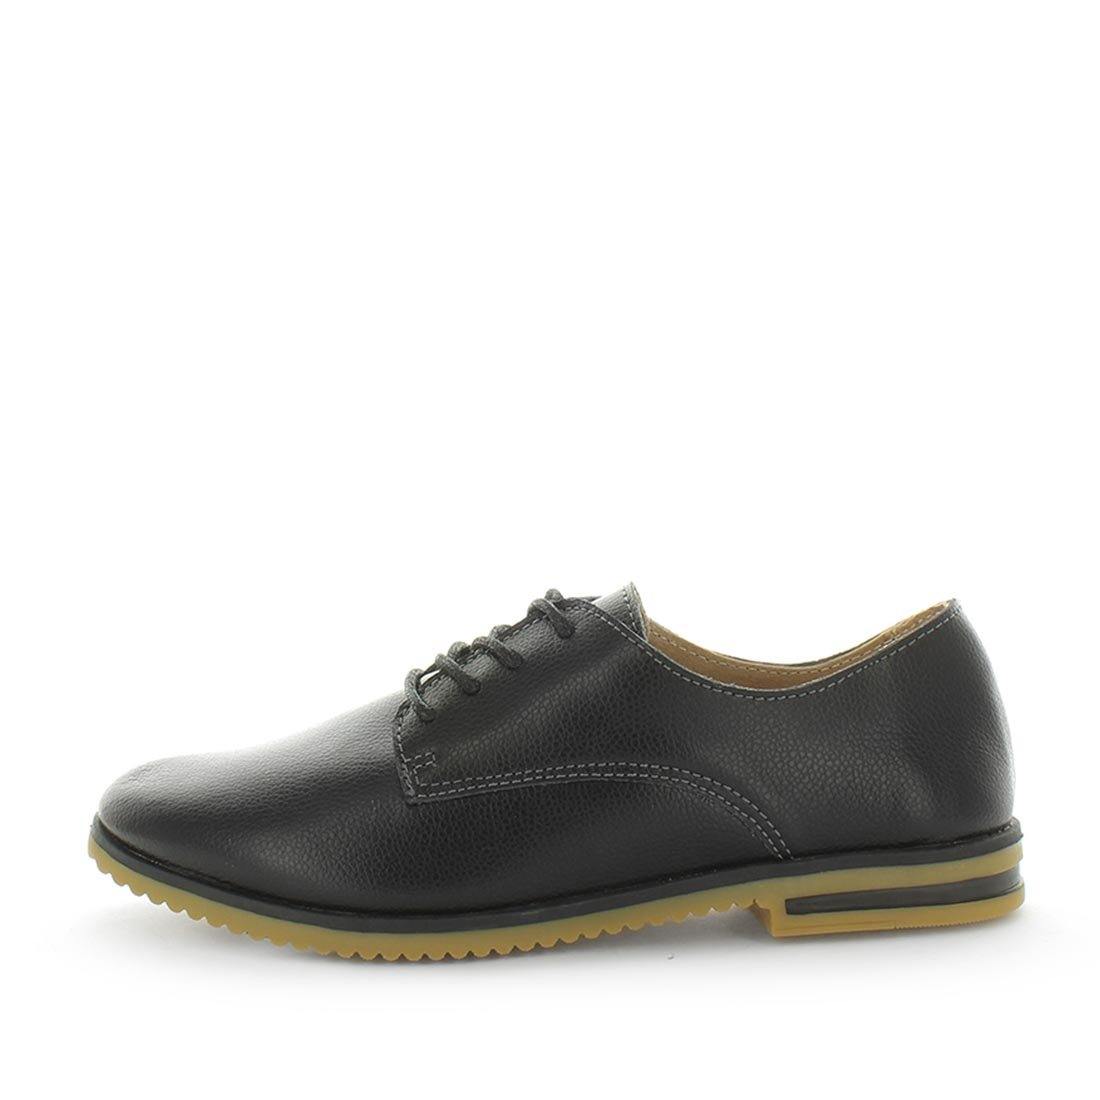 CORONEL by JUST BEE - iShoes - Sale, What's New: Women's New Arrivals, Women's Shoes, Women's Shoes: Flats - FOOTWEAR-FOOTWEAR